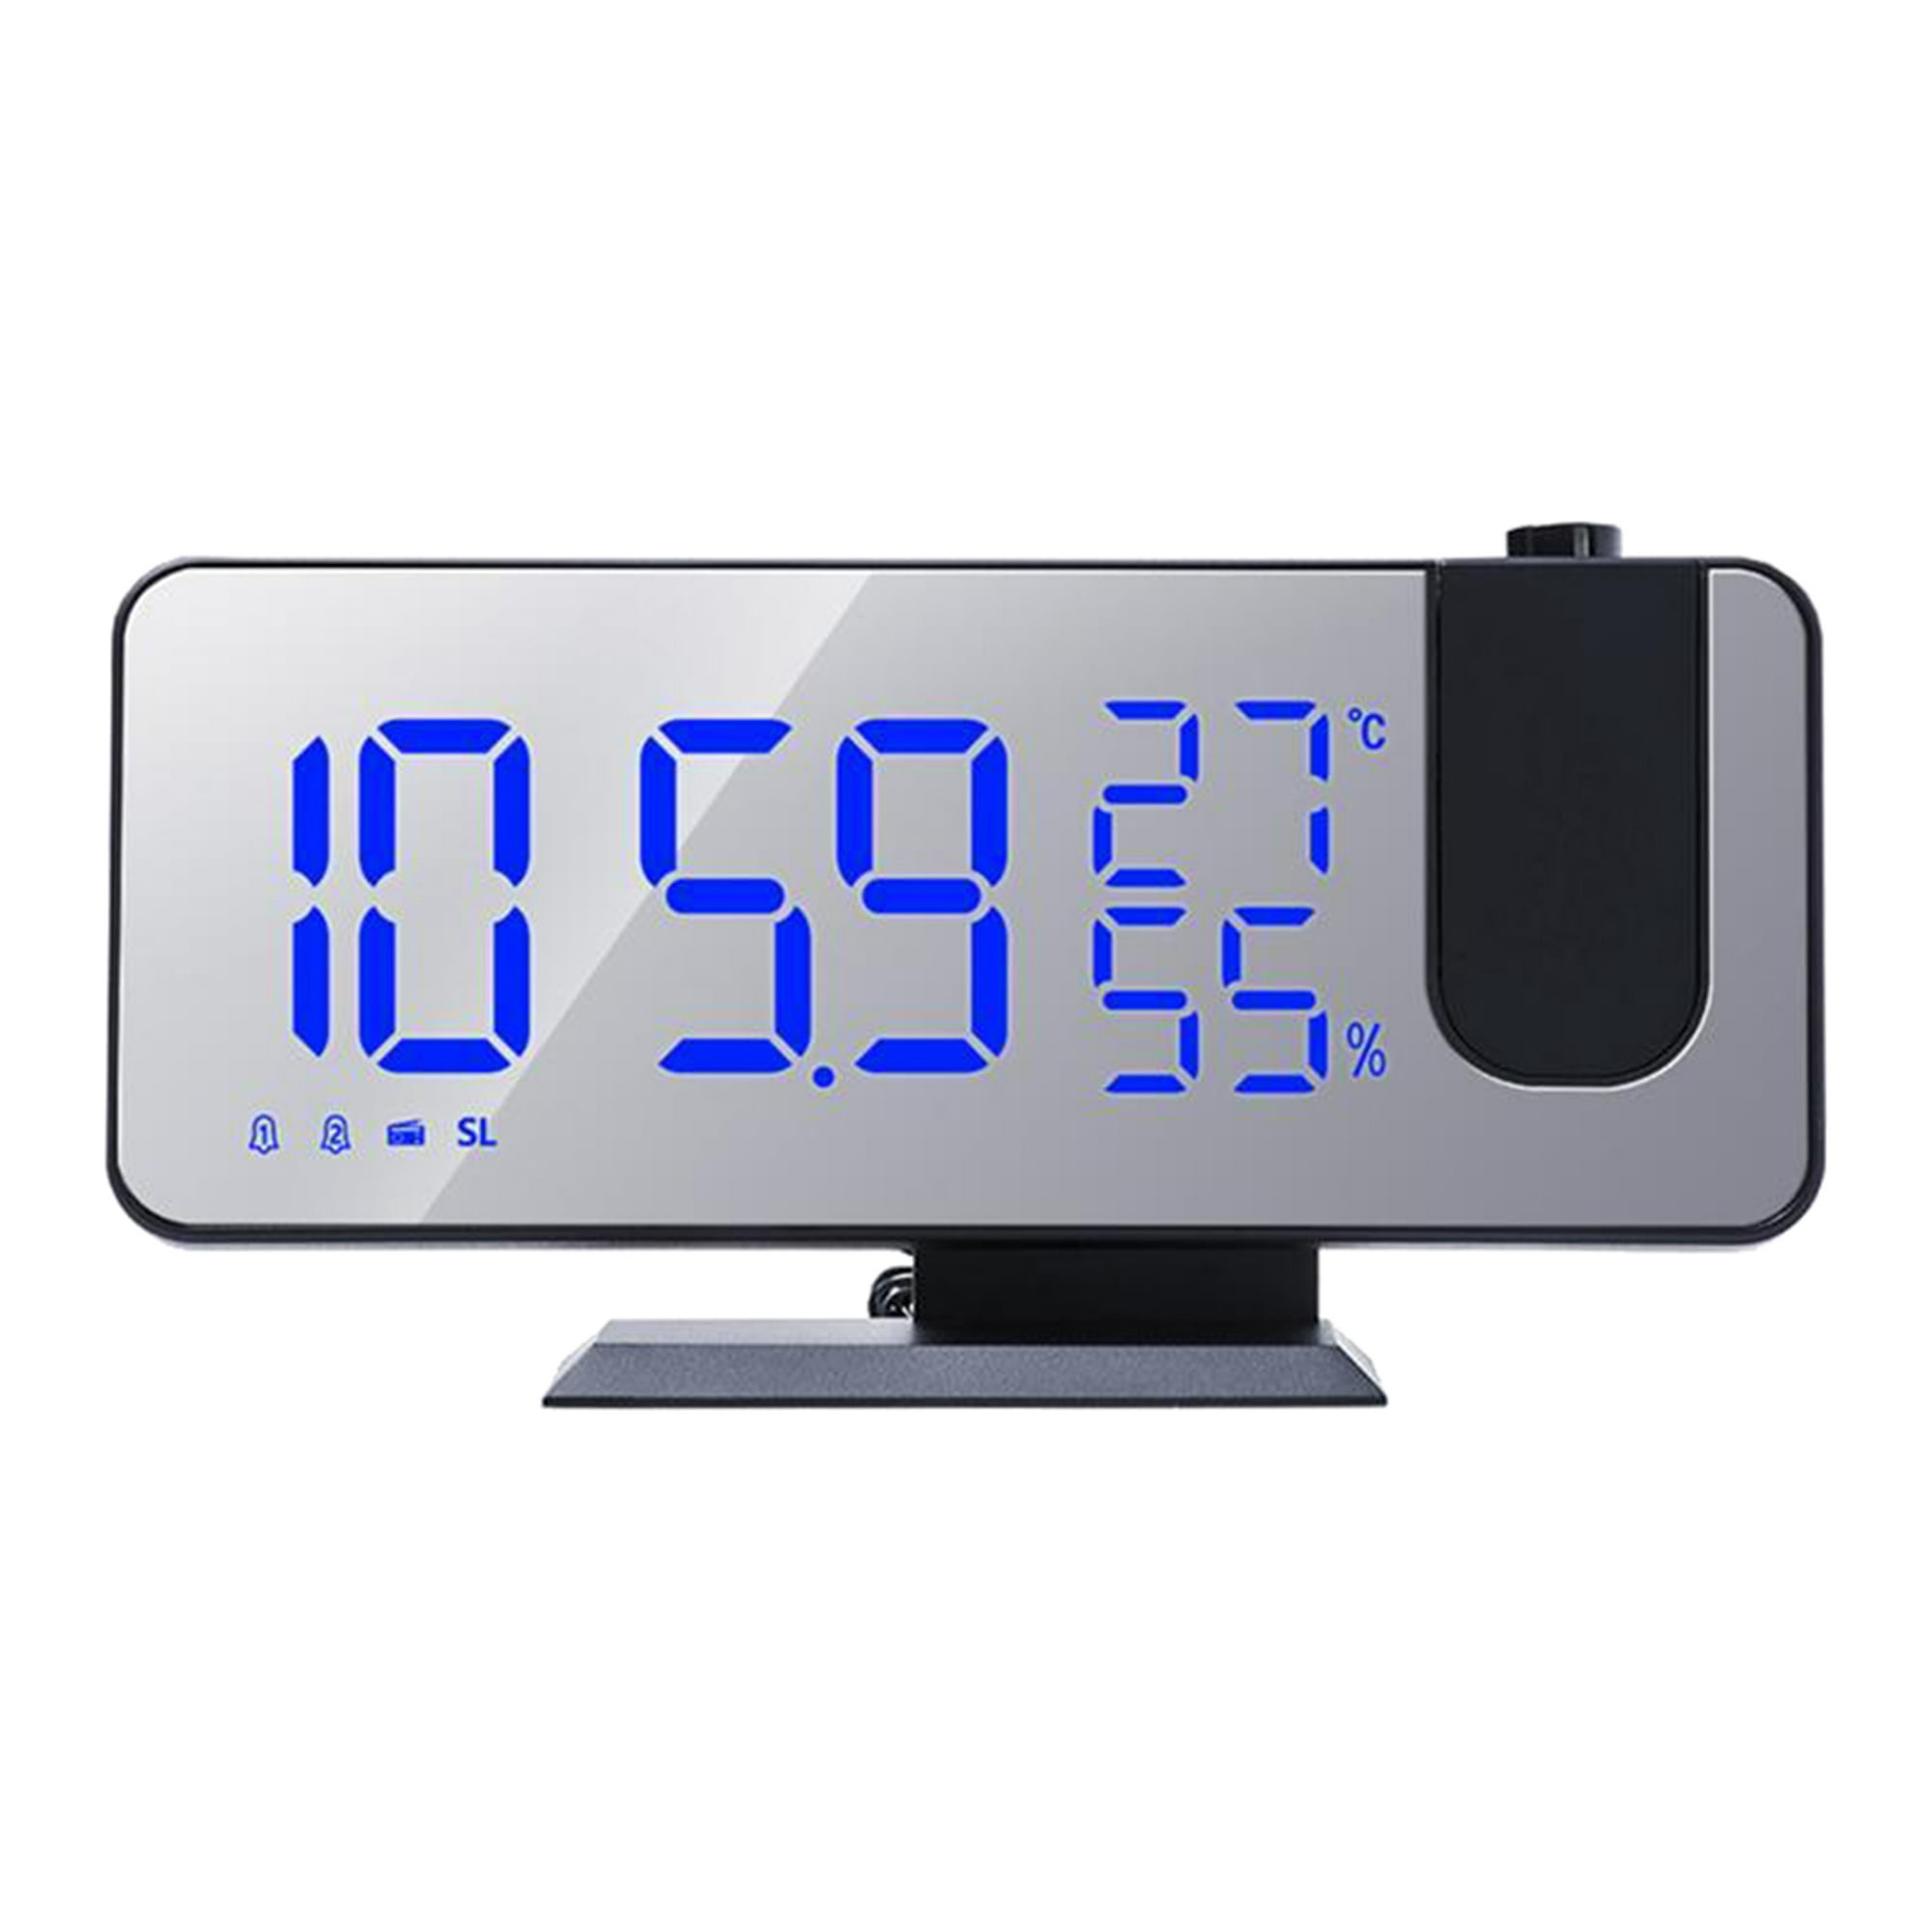 Reloj de espejo LED Mini reloj despertador digital Reloj de mesa con  función de repetición Abanopi Reloj digital